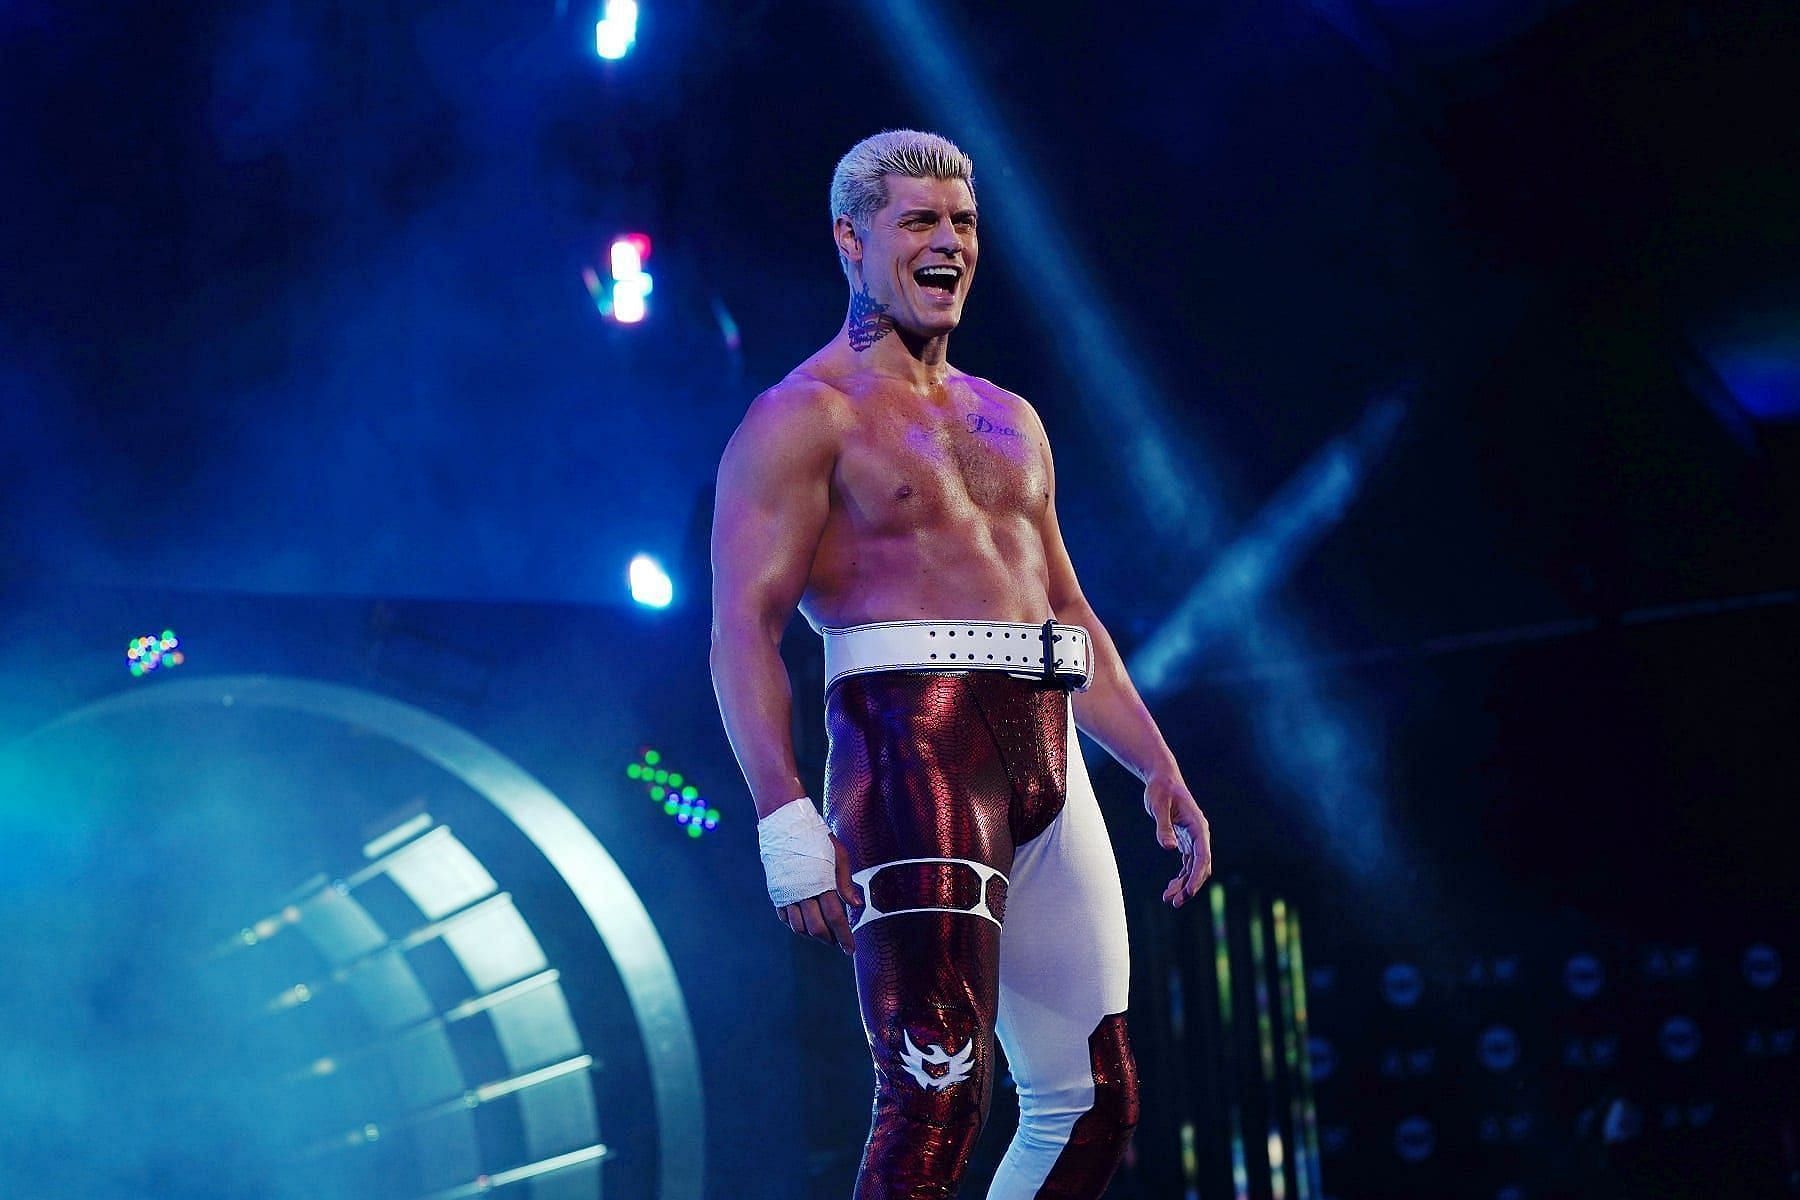 Could Cody Rhodes make a sensational comeback?